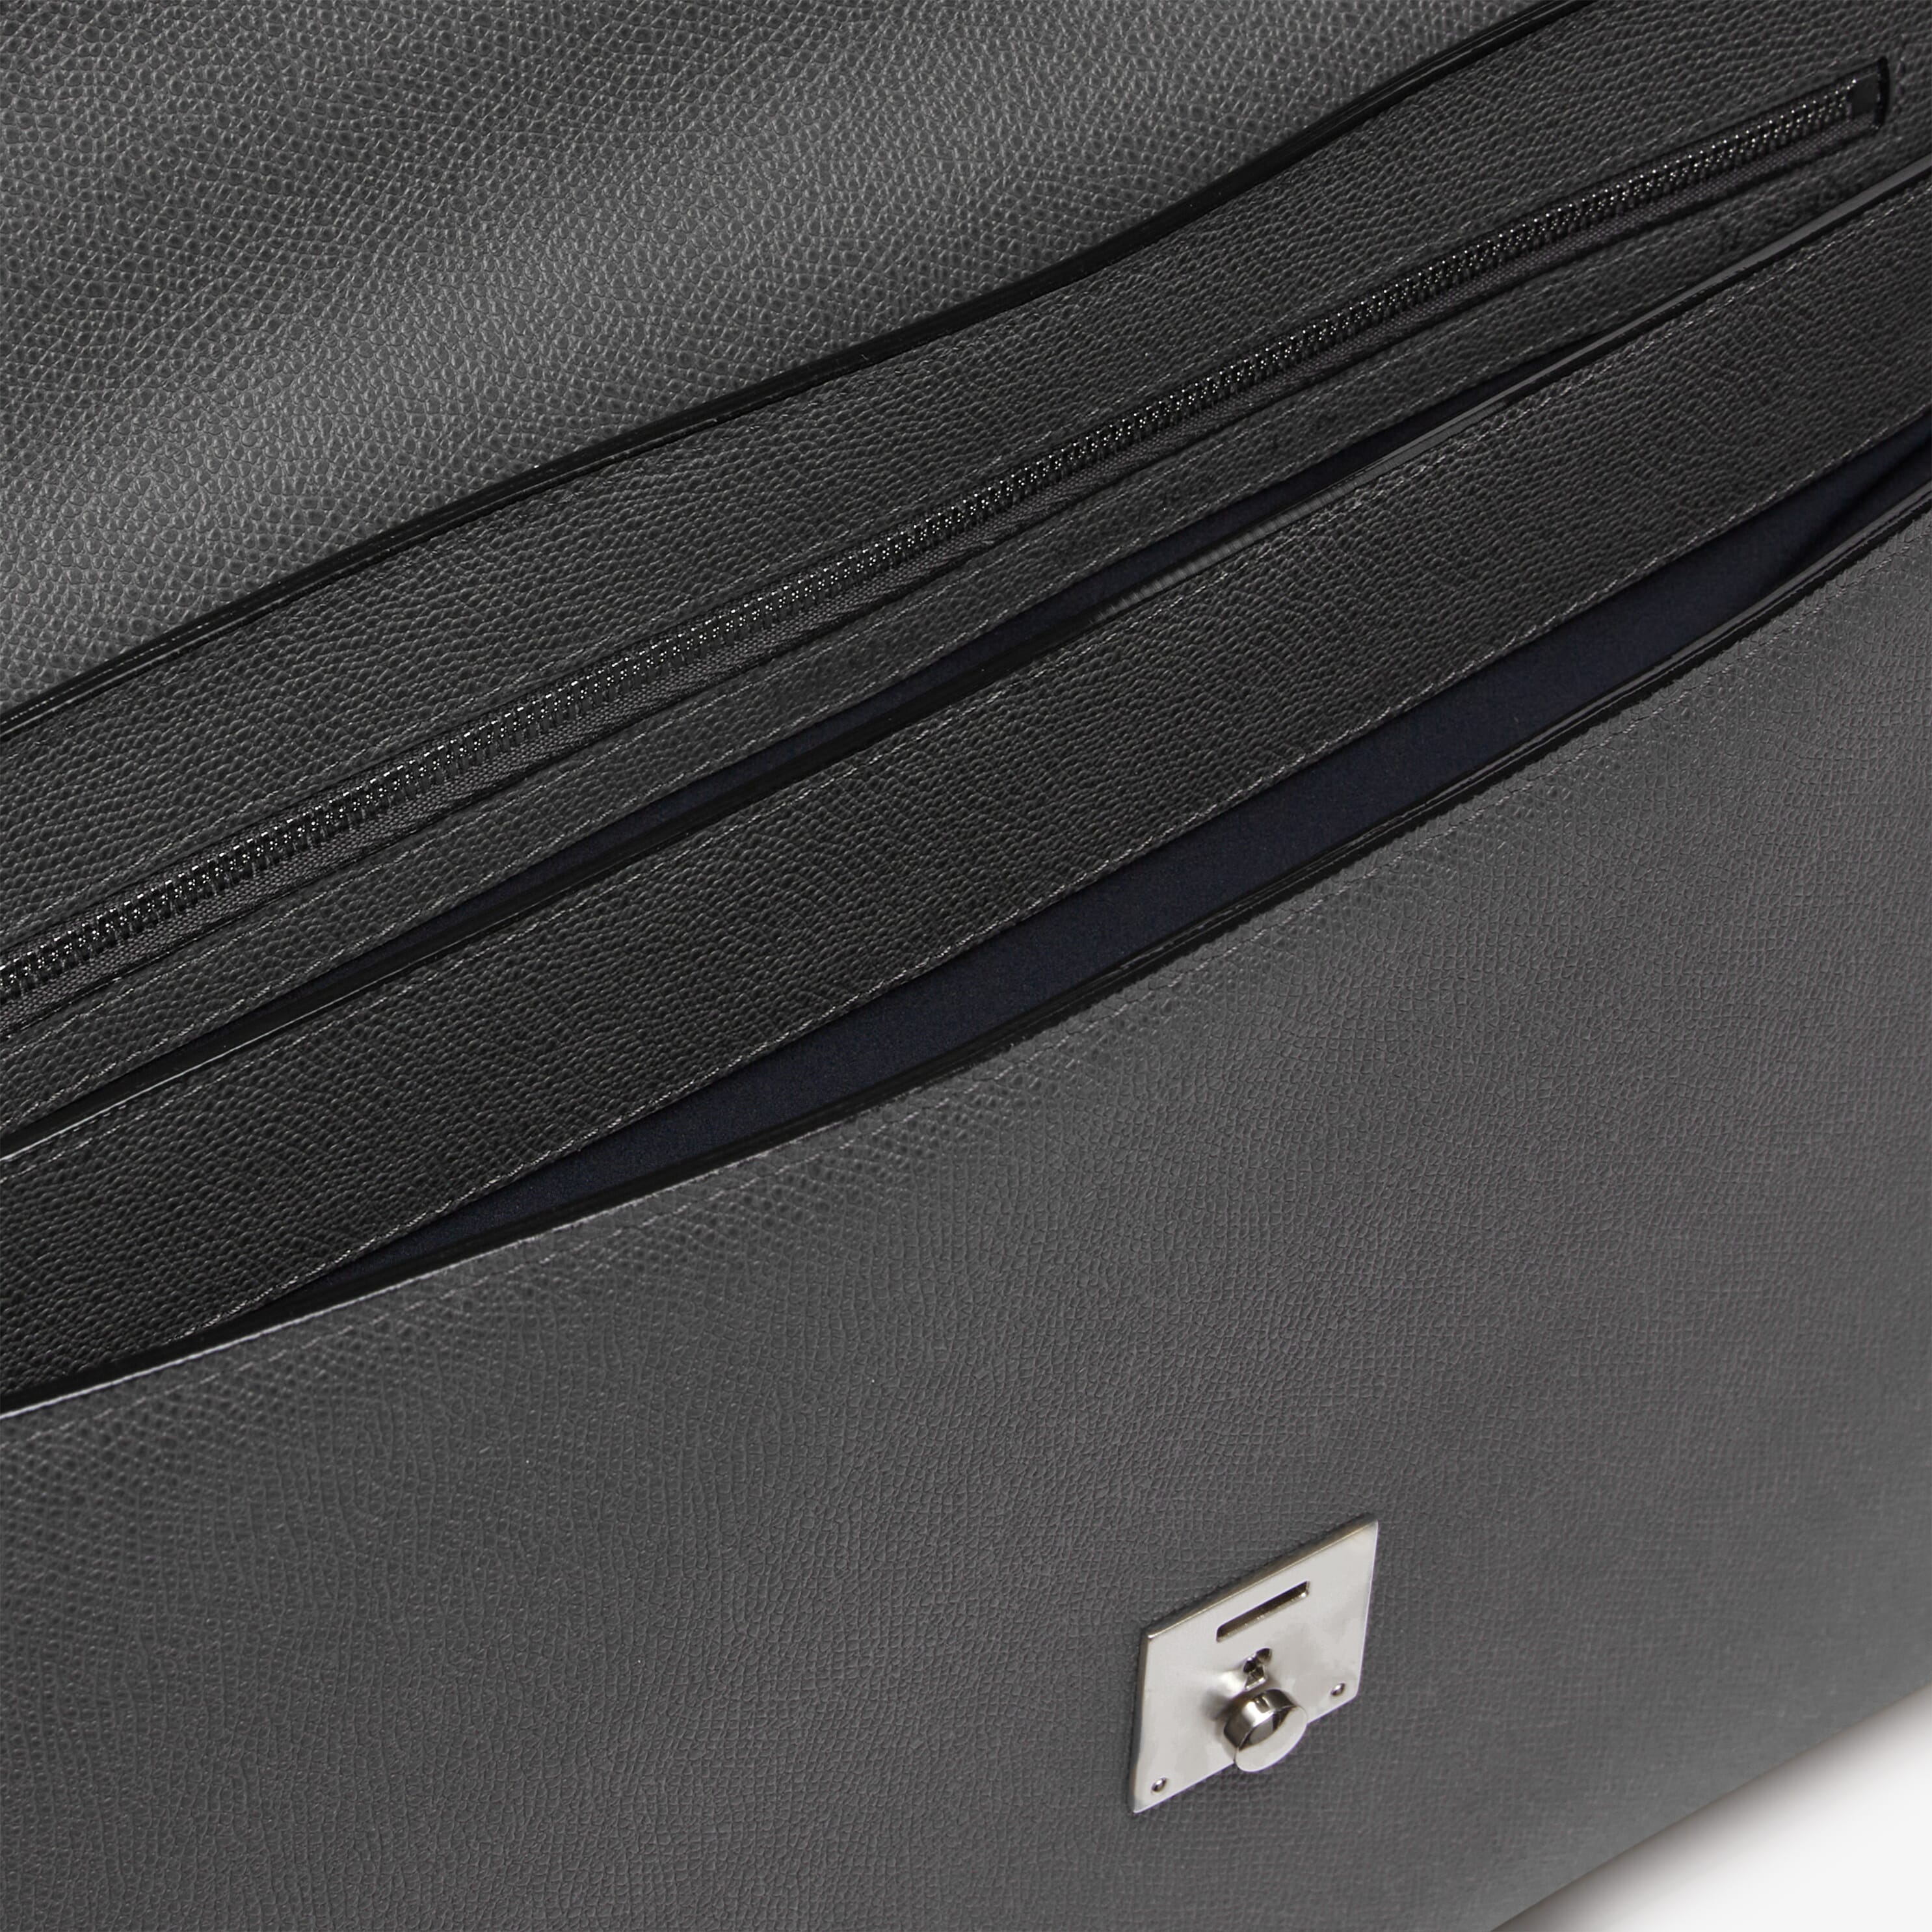 Avietta Briefcase with Flap 24h - Smokey Grey - Vitello VS - Valextra - 3